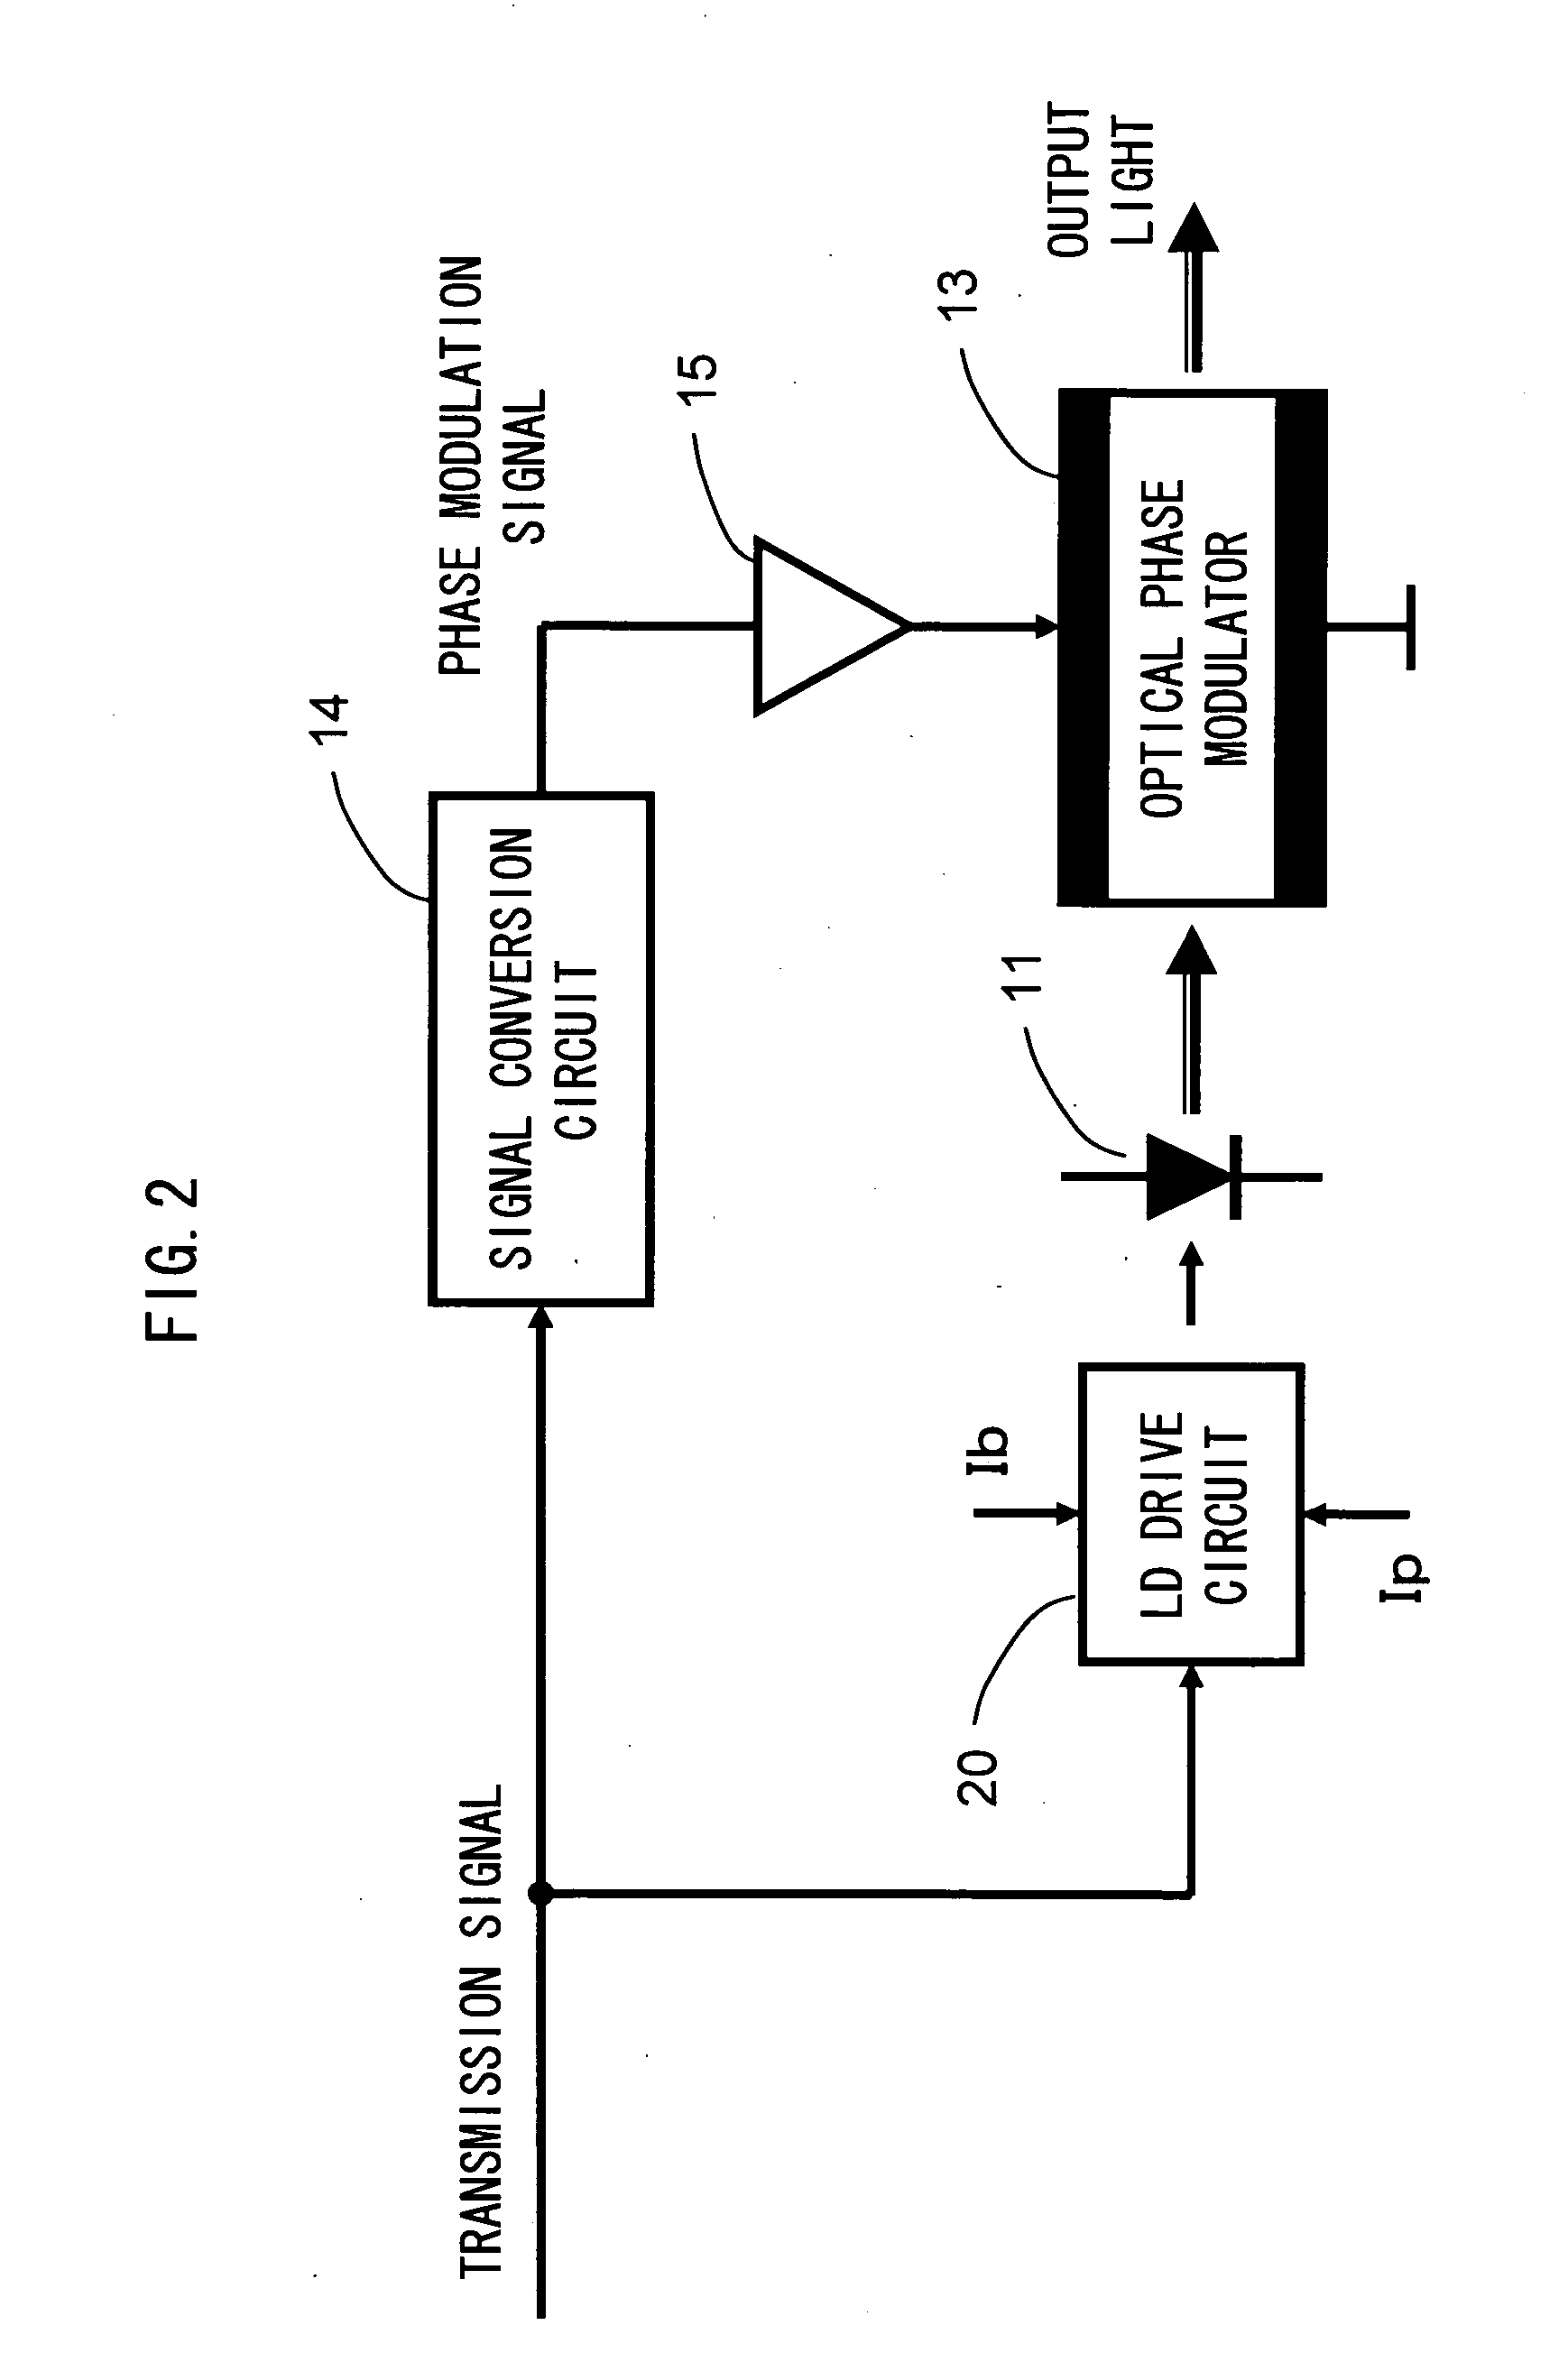 Optical transmission device and optical phase modulator